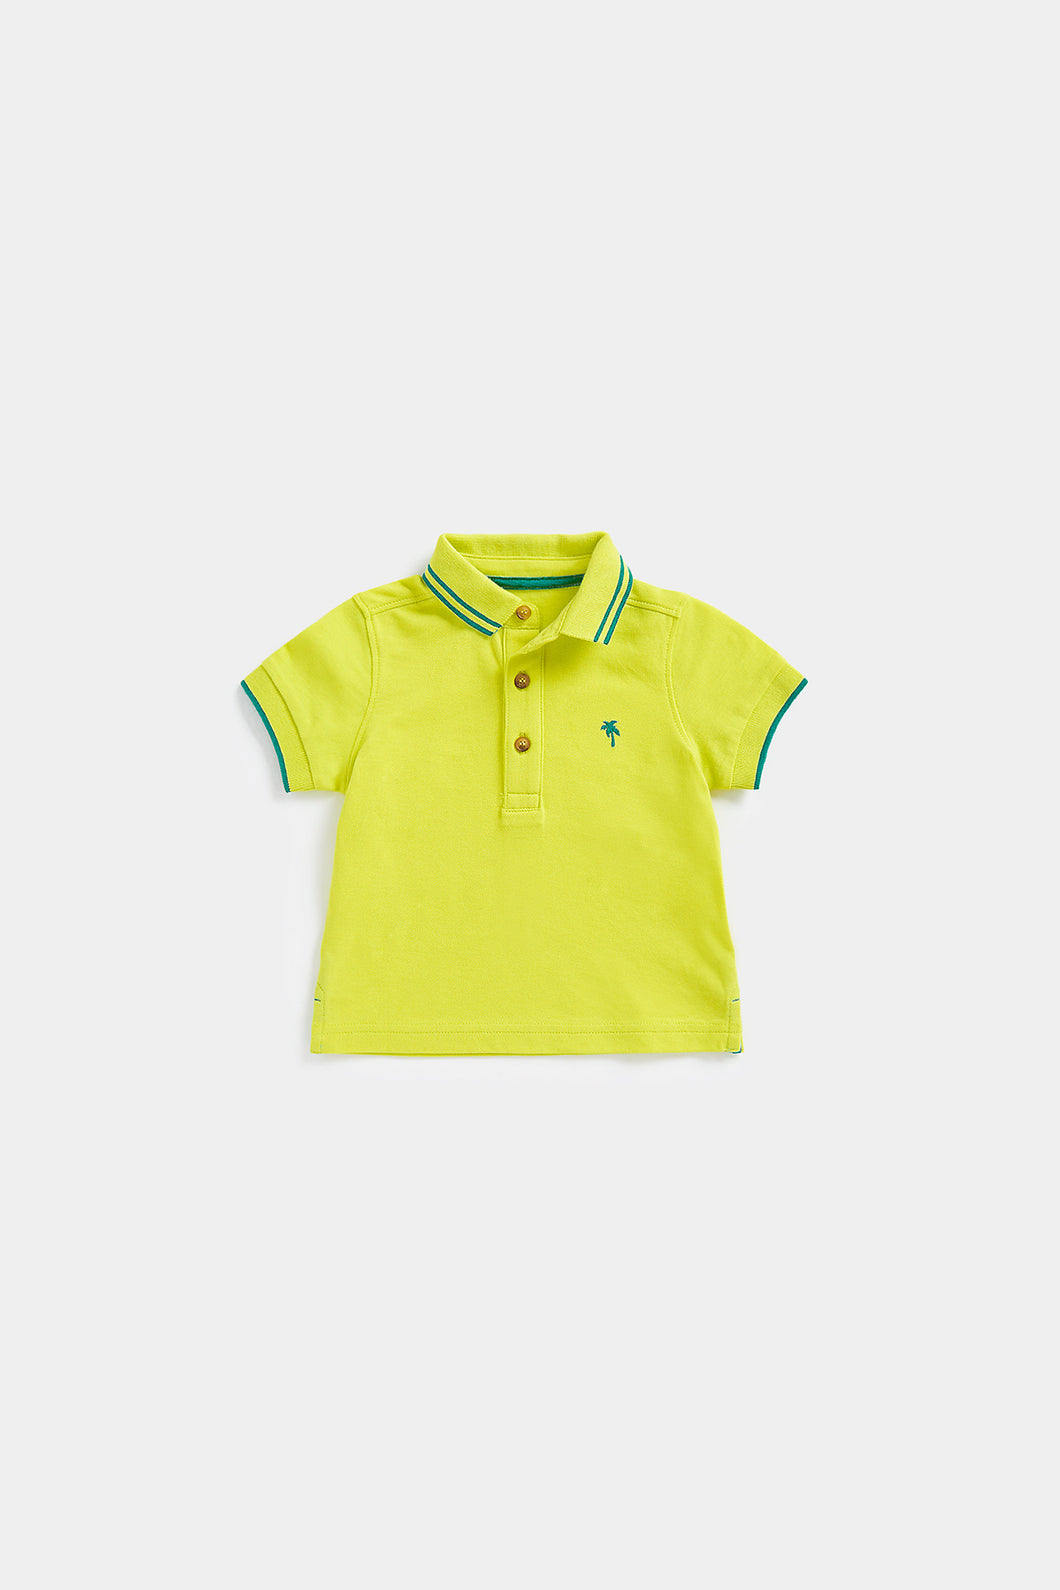 Mothercare Yellow Polo Shirt